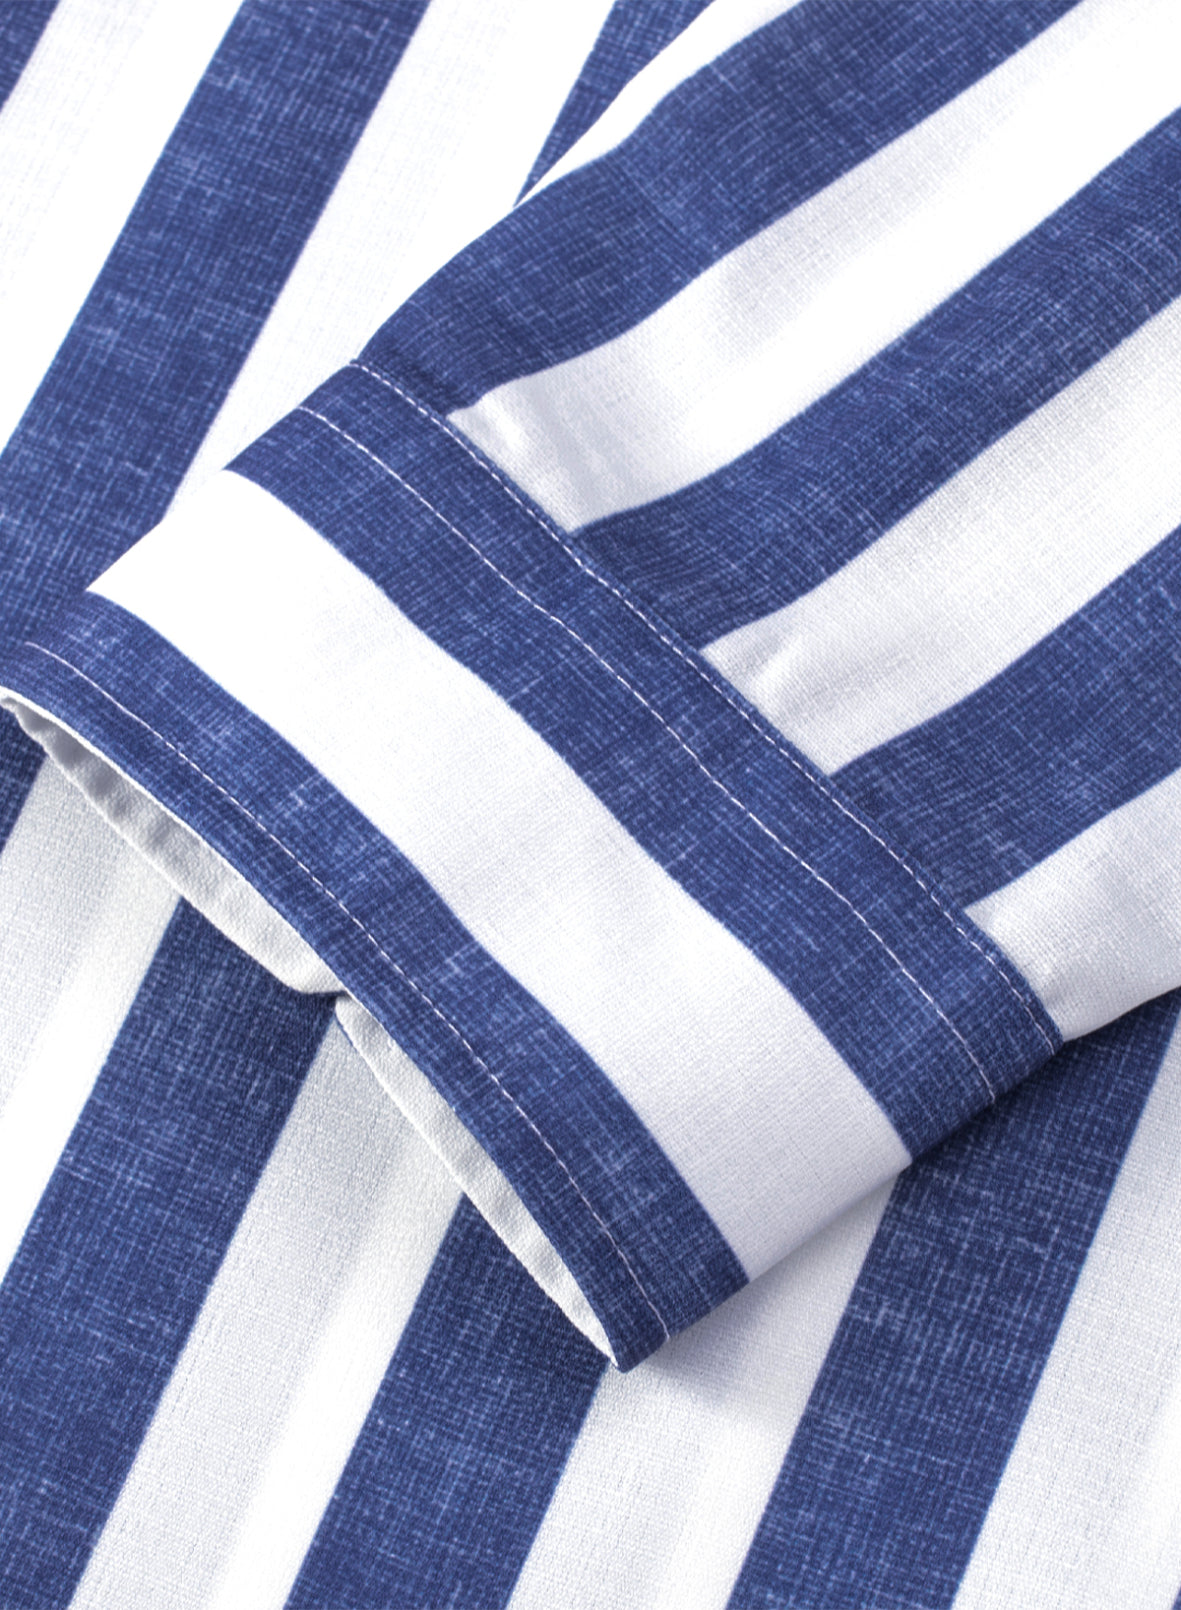 Mens Button Down Long Sleeve Shirts Fashion Cotton Linen Striped Casual Beach Shirt | MC255371-7019 Navy Stripes / M / (Us 40)